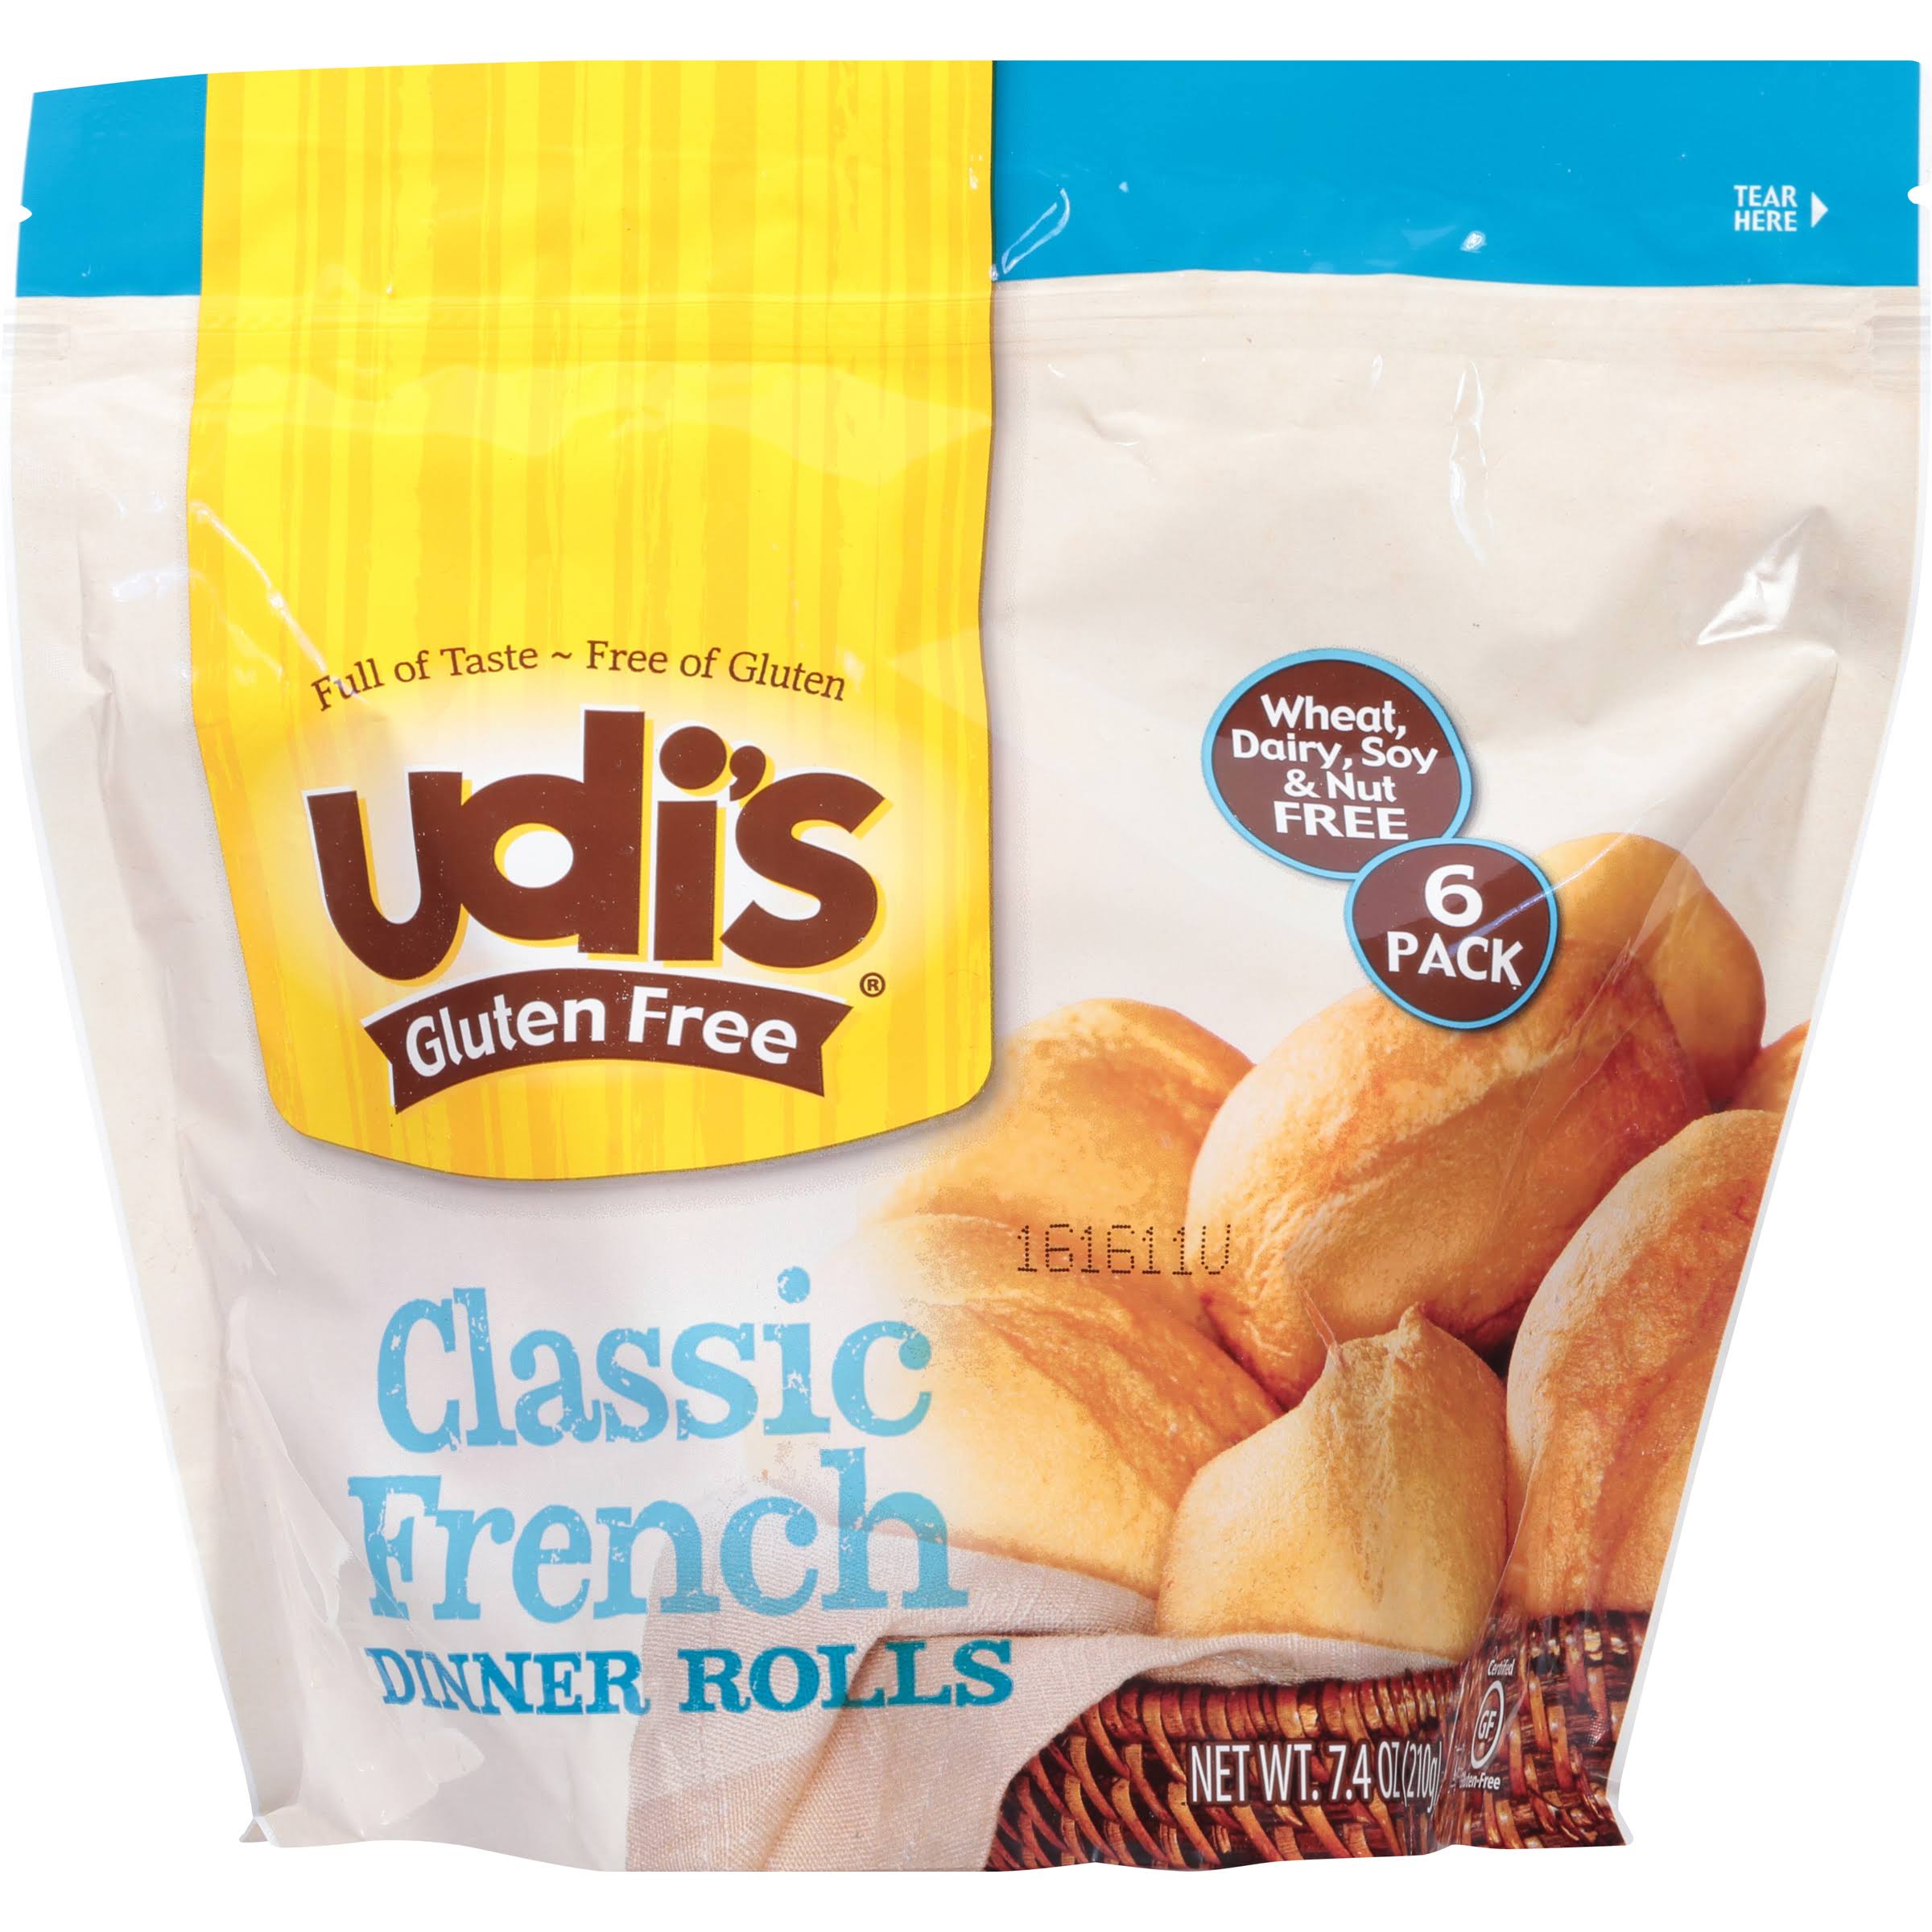 Udi's Gluten-free Classic French Dinner Rolls - 1 Packs Has 6 Rolls